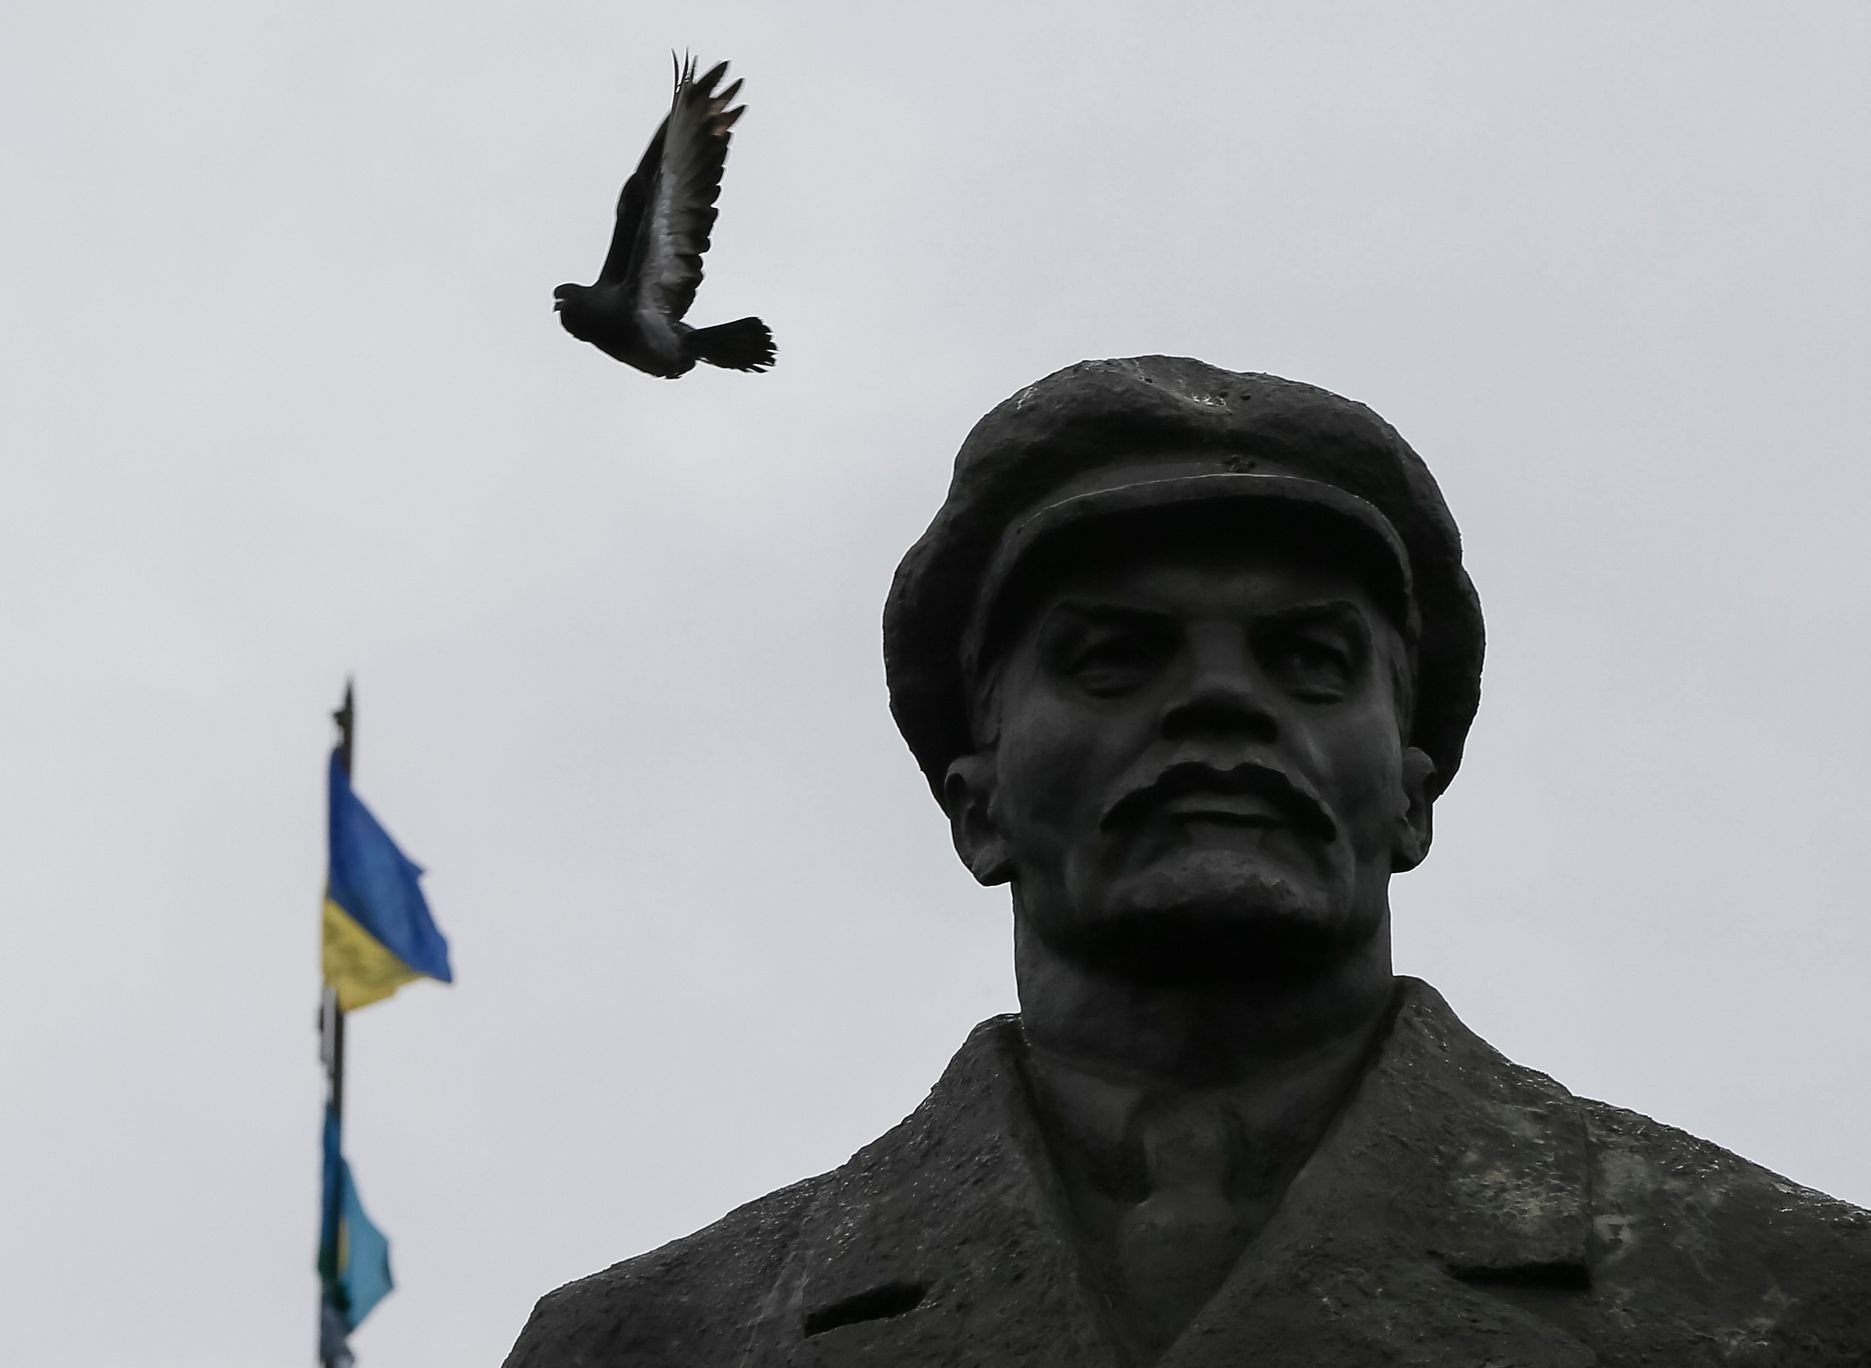 Ukrajinská vlajka - ukrajina - slavjansk - lenin - holub